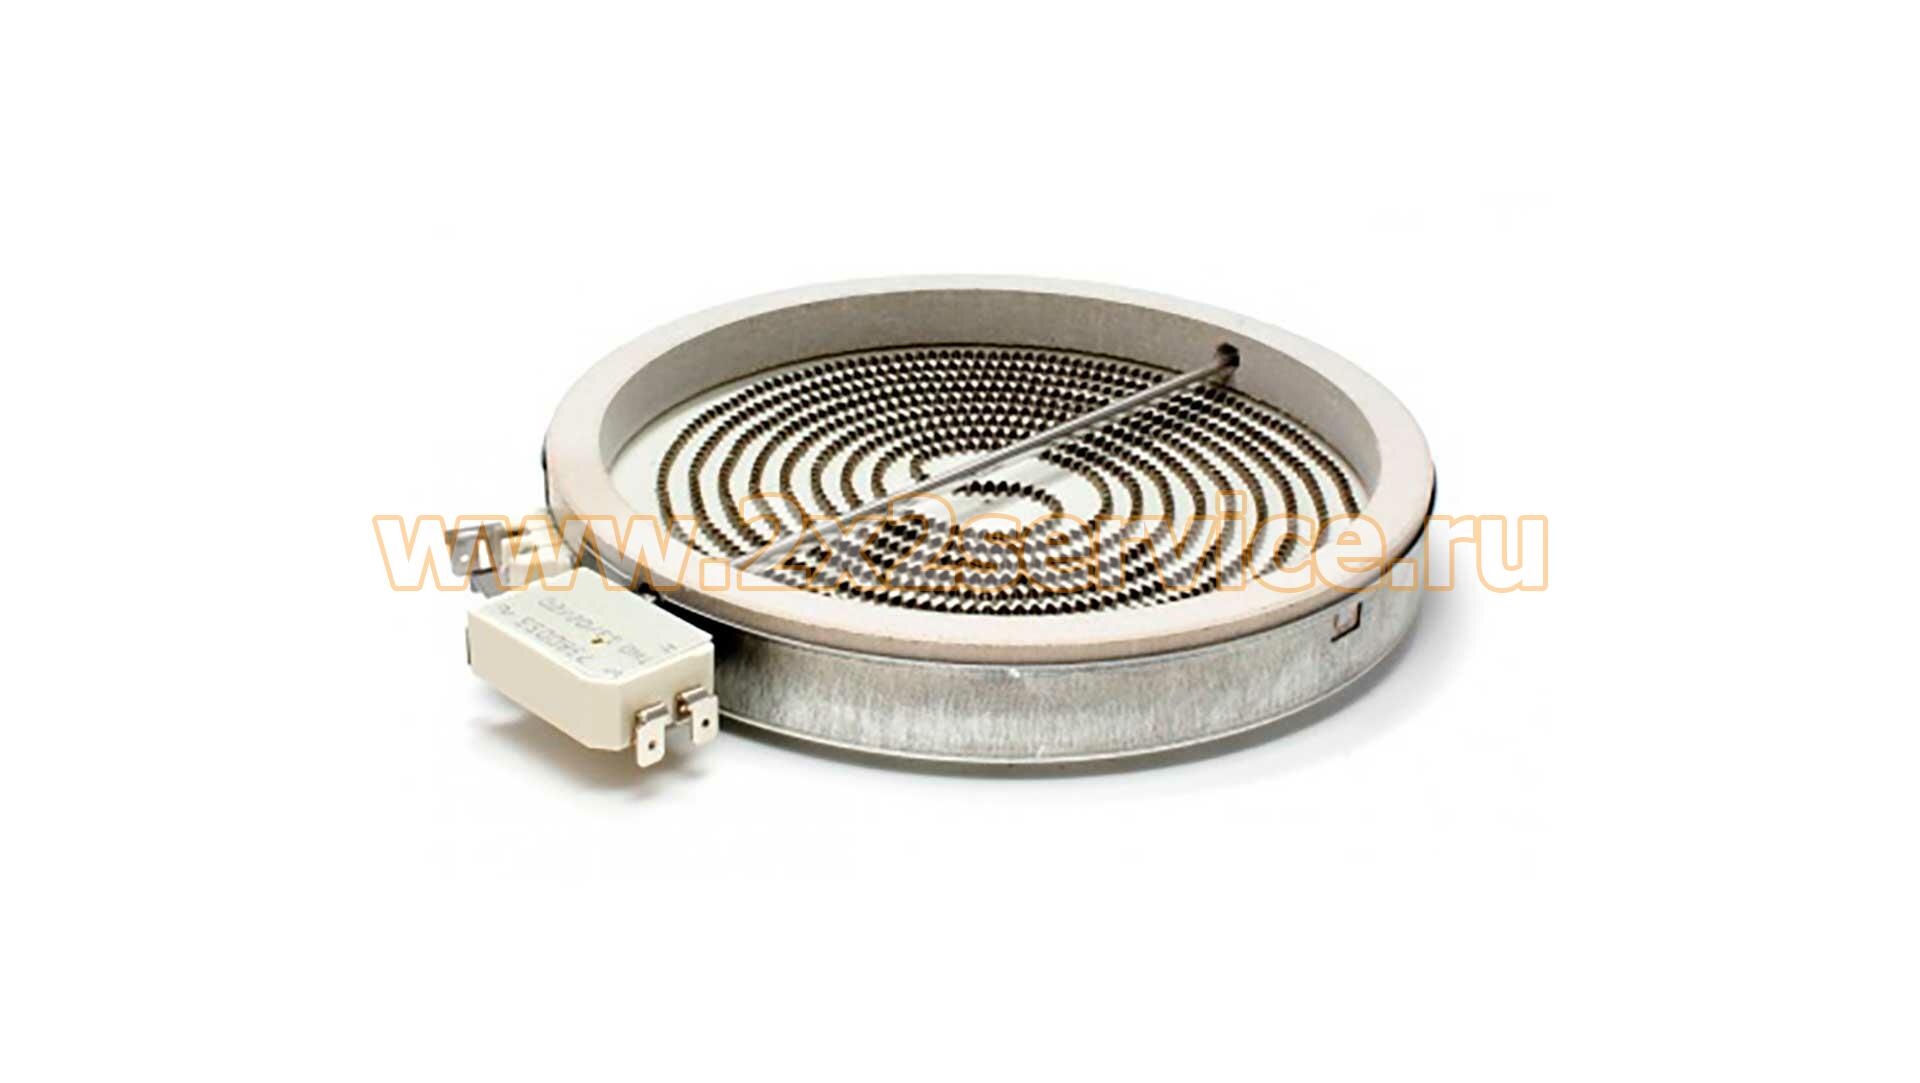 Конфорка 200mm 1700W стеклокерамической поверхности Whirlpool (480121101516)